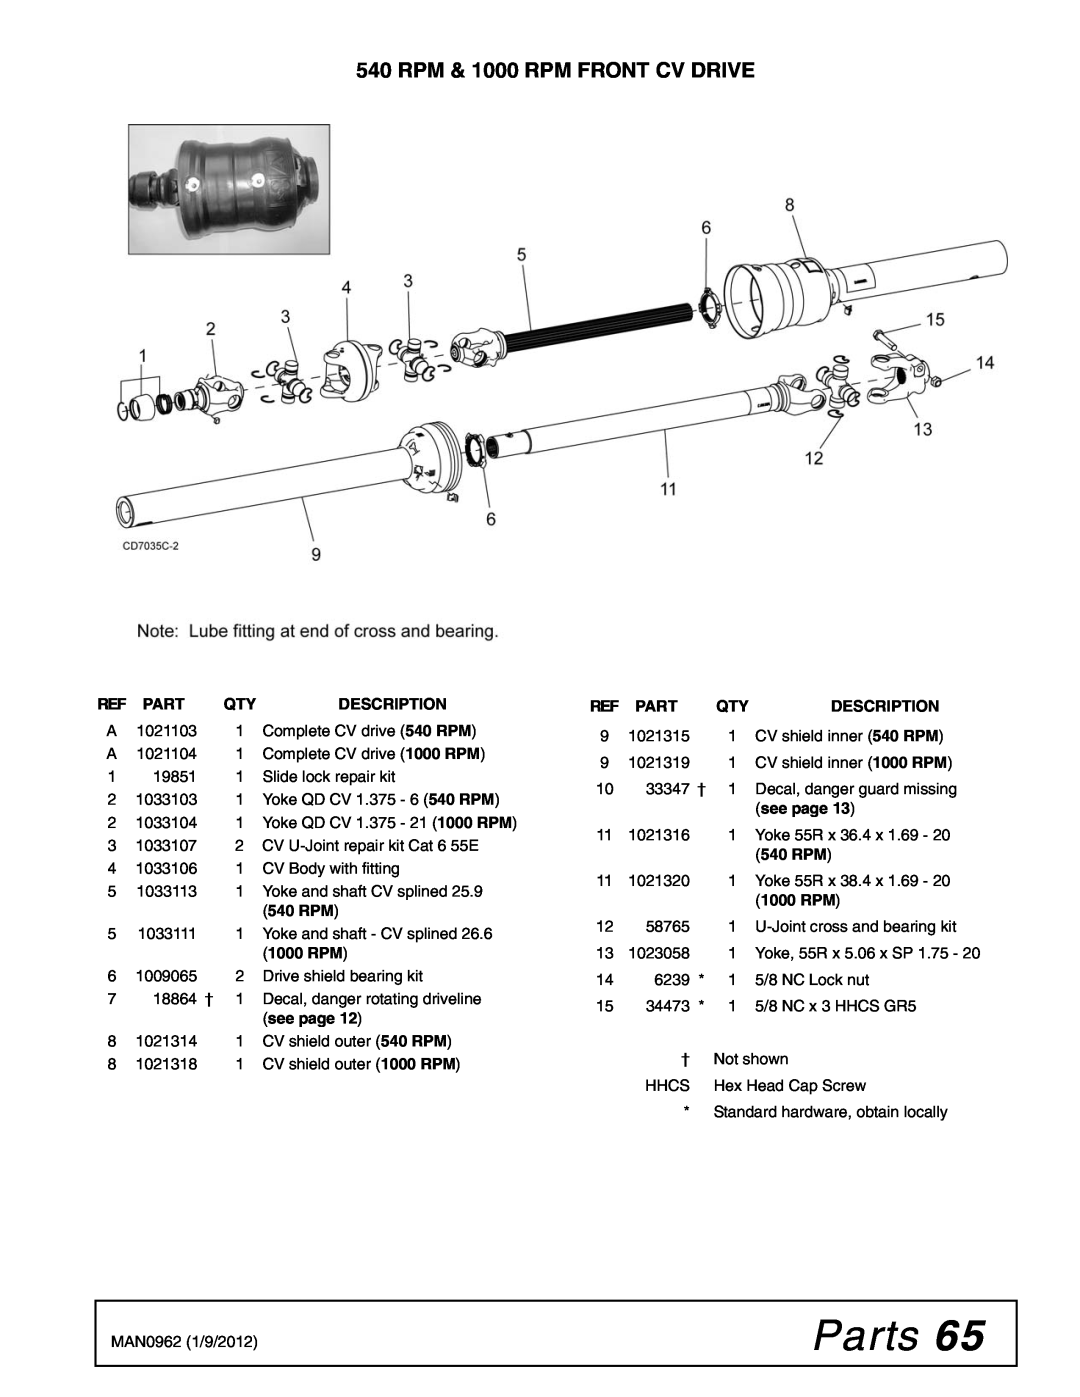 Woods Equipment BW126XQ, BW180XQ manual Parts, RPM & 1000 RPM FRONT CV DRIVE, Description, 540 RPM, see page 